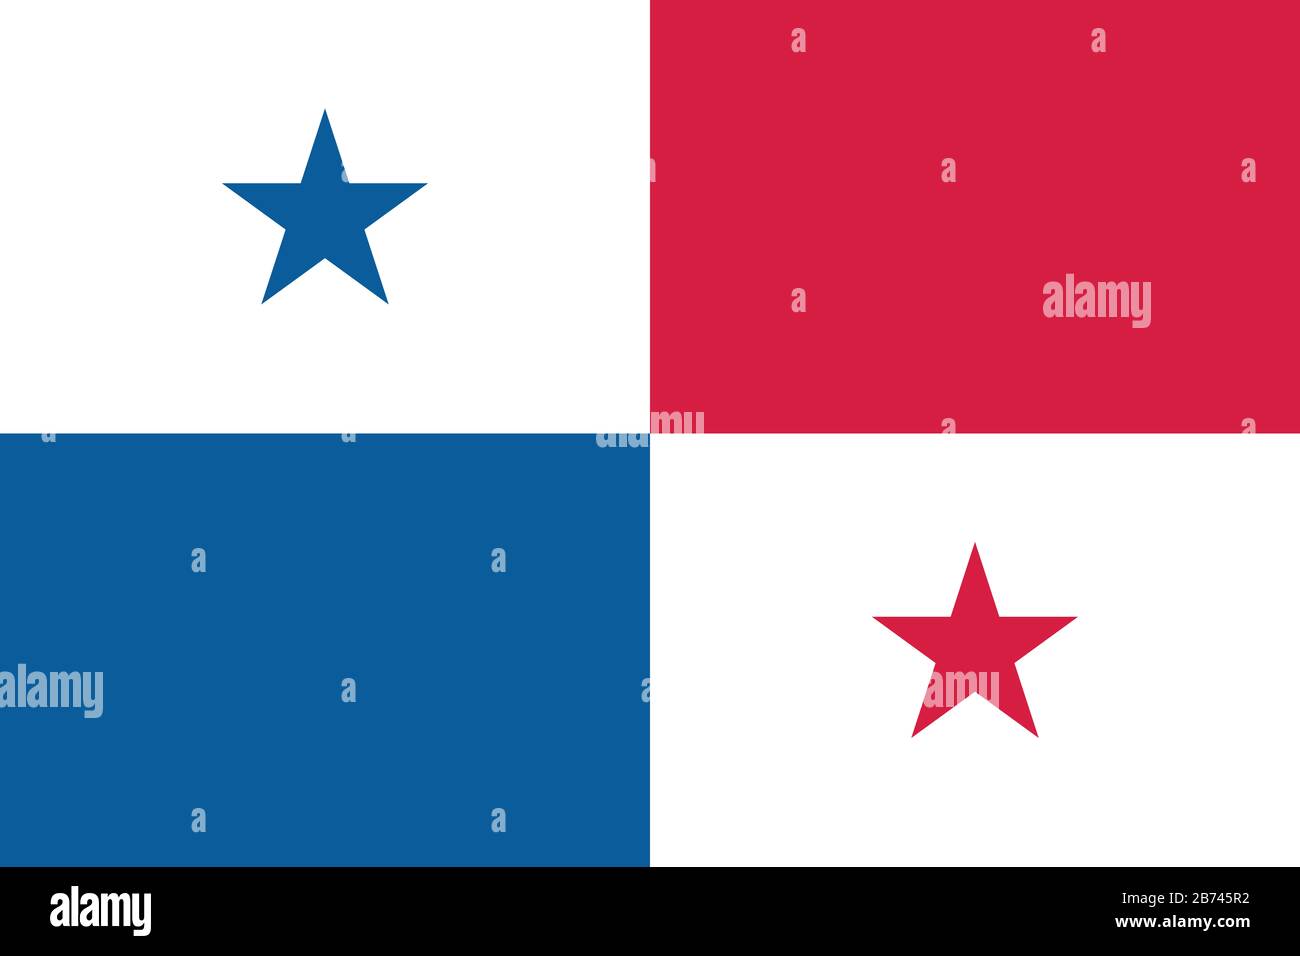 Flagge Panamas - Standardverhältnis der panamaischen Flagge - True RGB-Farbmodus Stockfoto